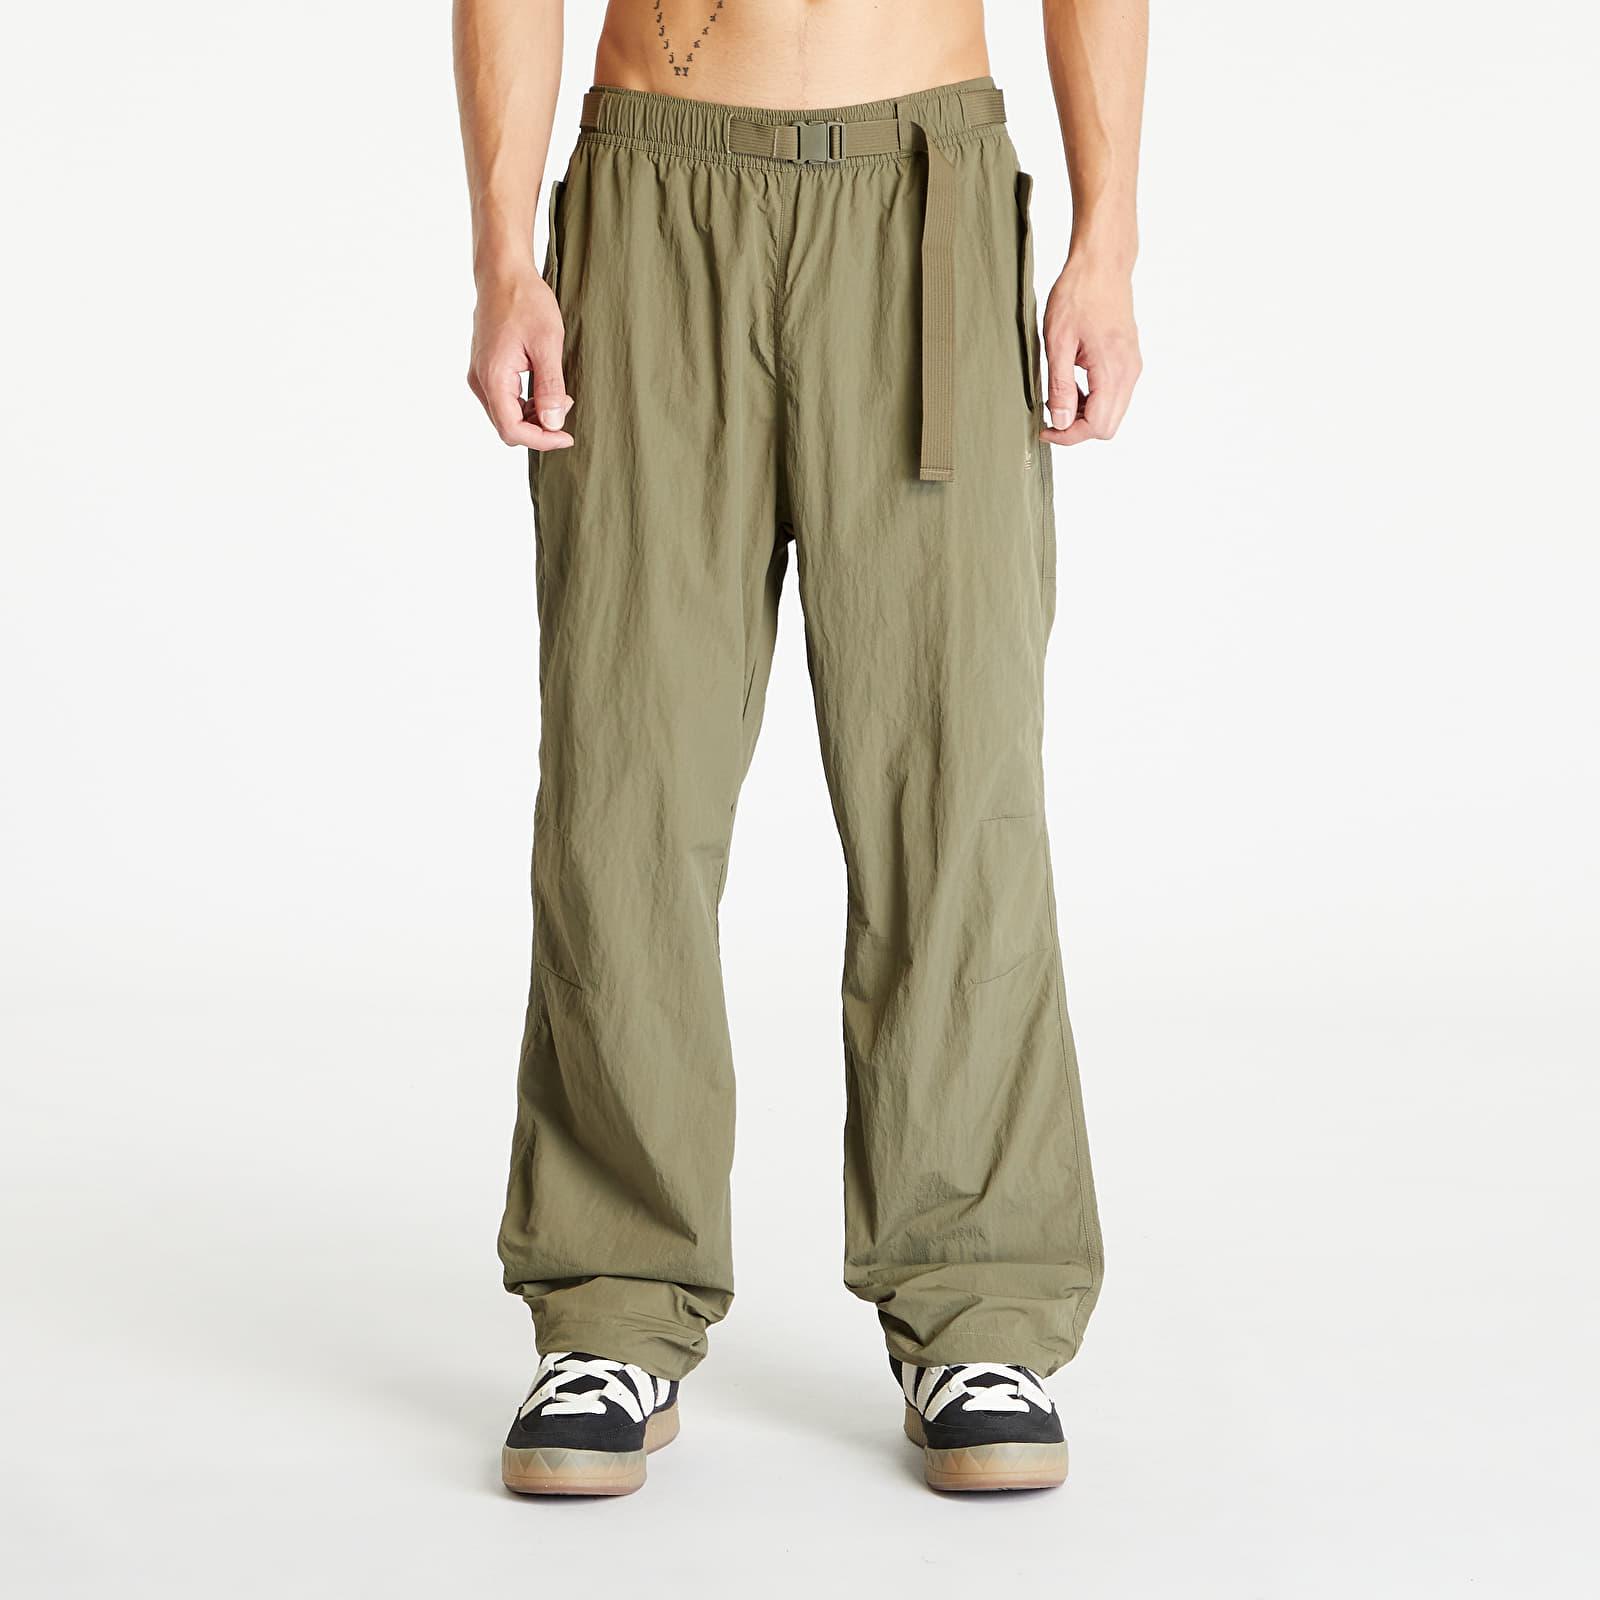 adidas Originals Adventure Cargo in Lyst Olive Strata Green Pants Men | for